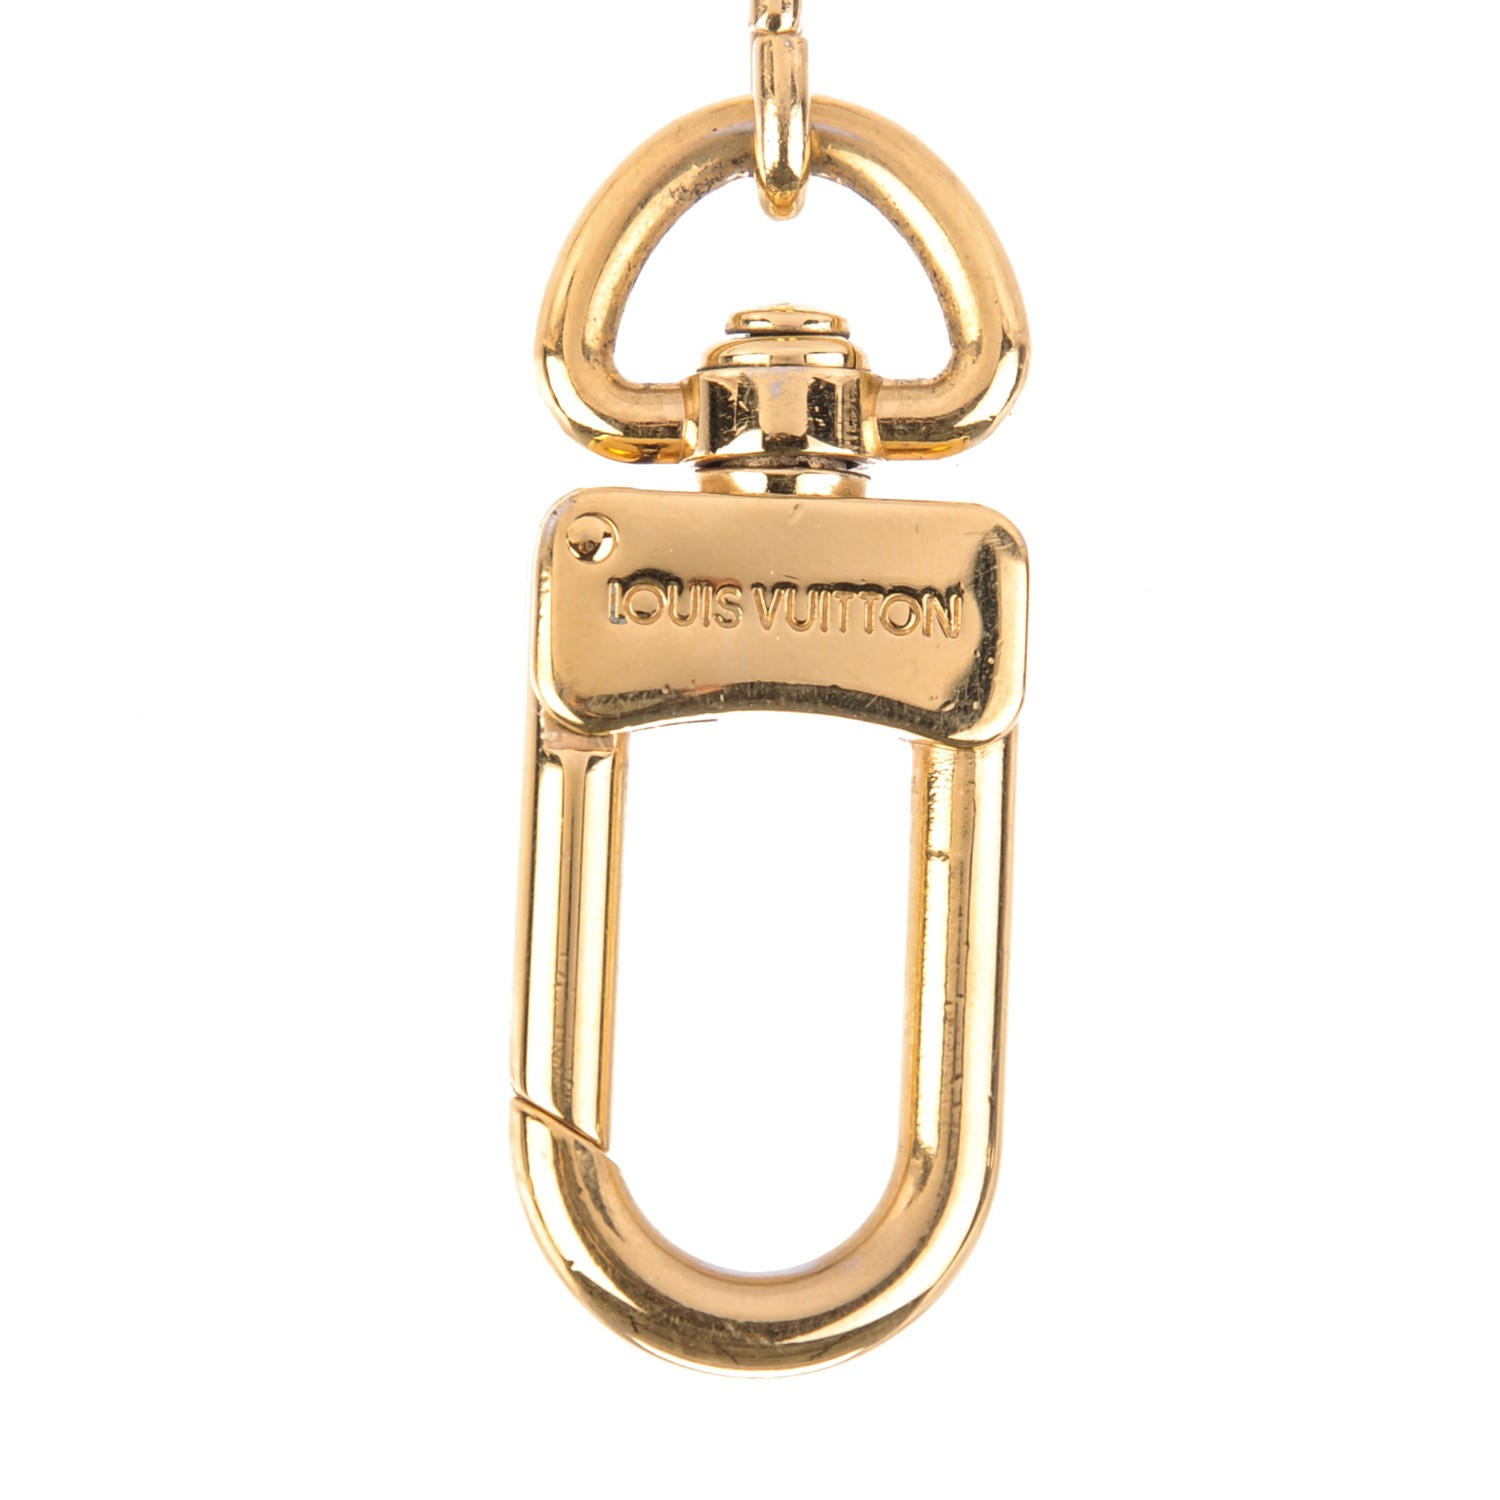 LOUIS VUITTON Pochette Extender Key Ring Gold 217886